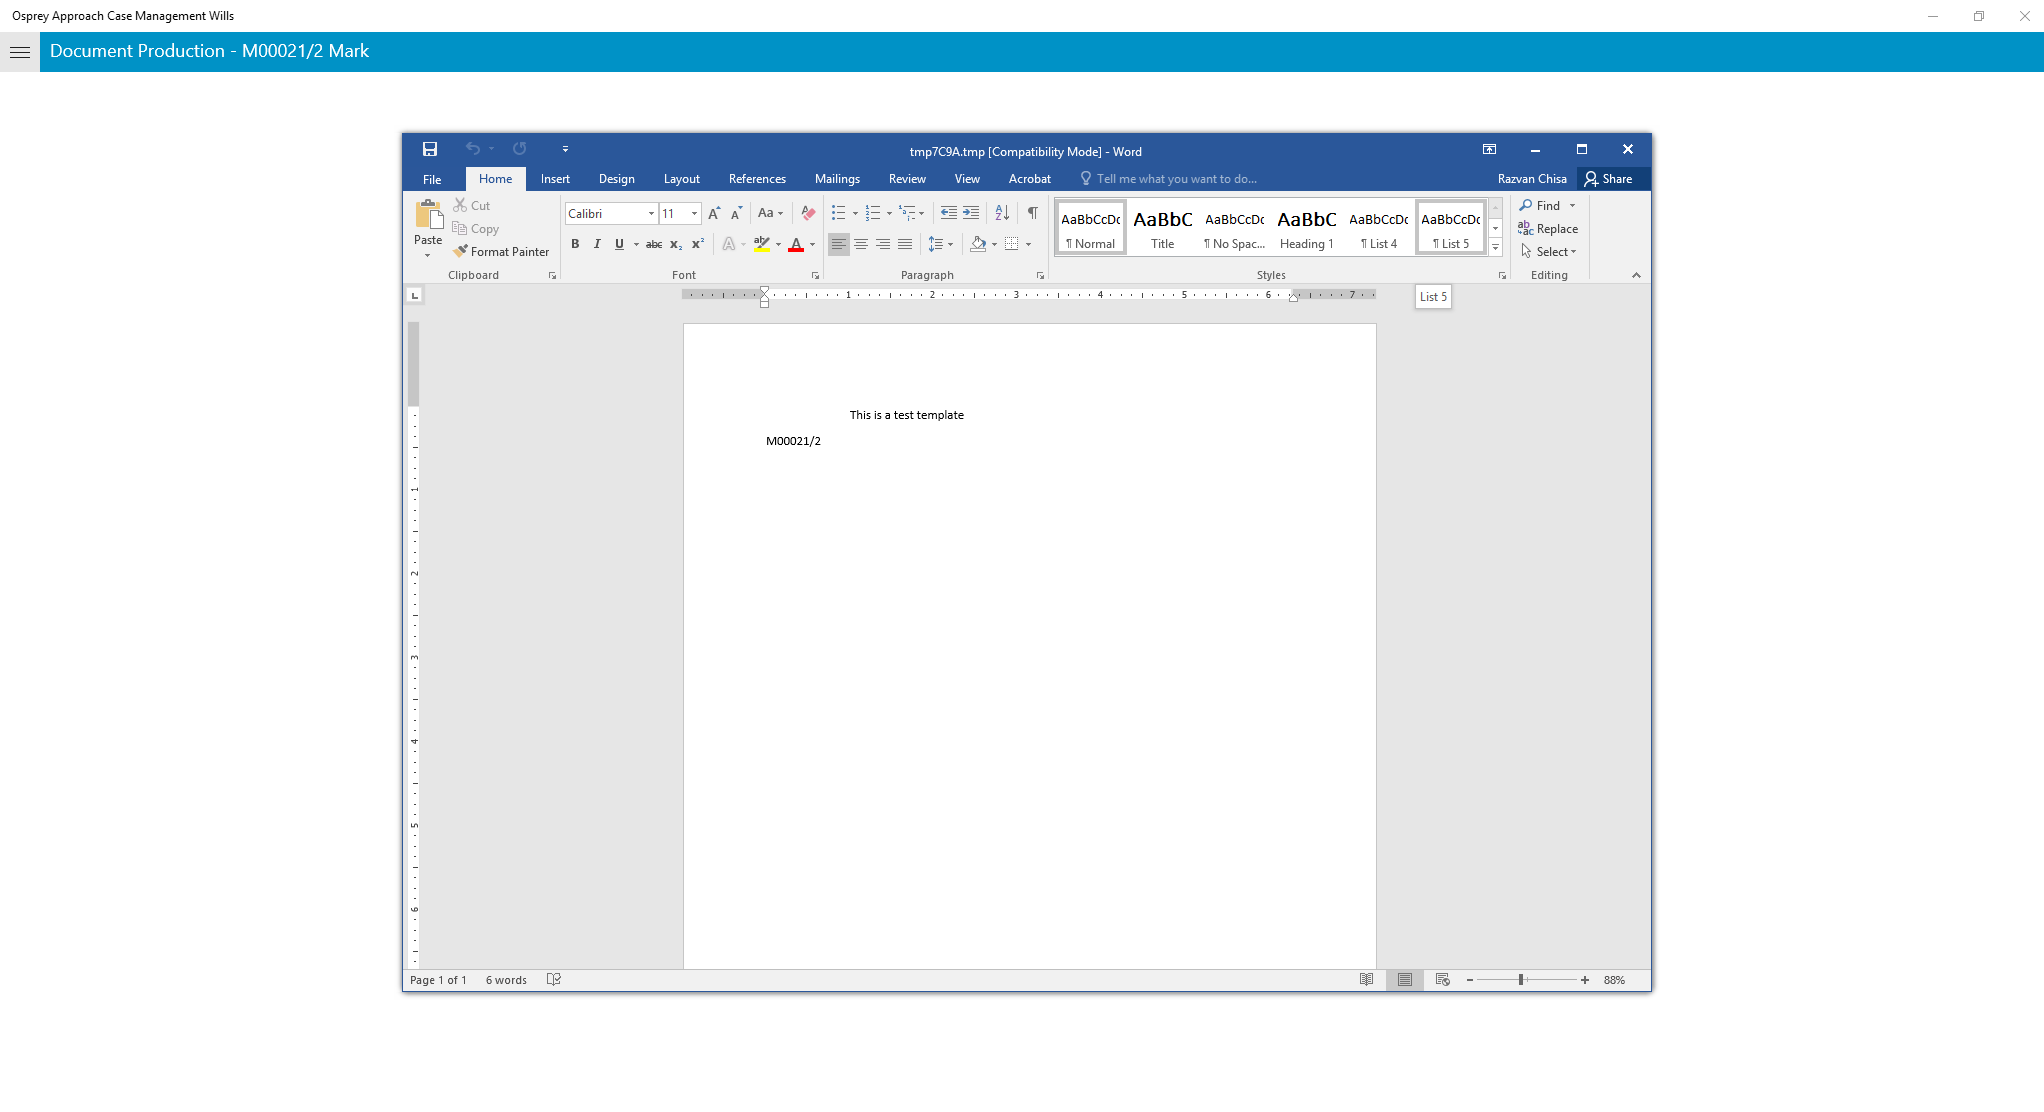 Document production using Microsoft Word